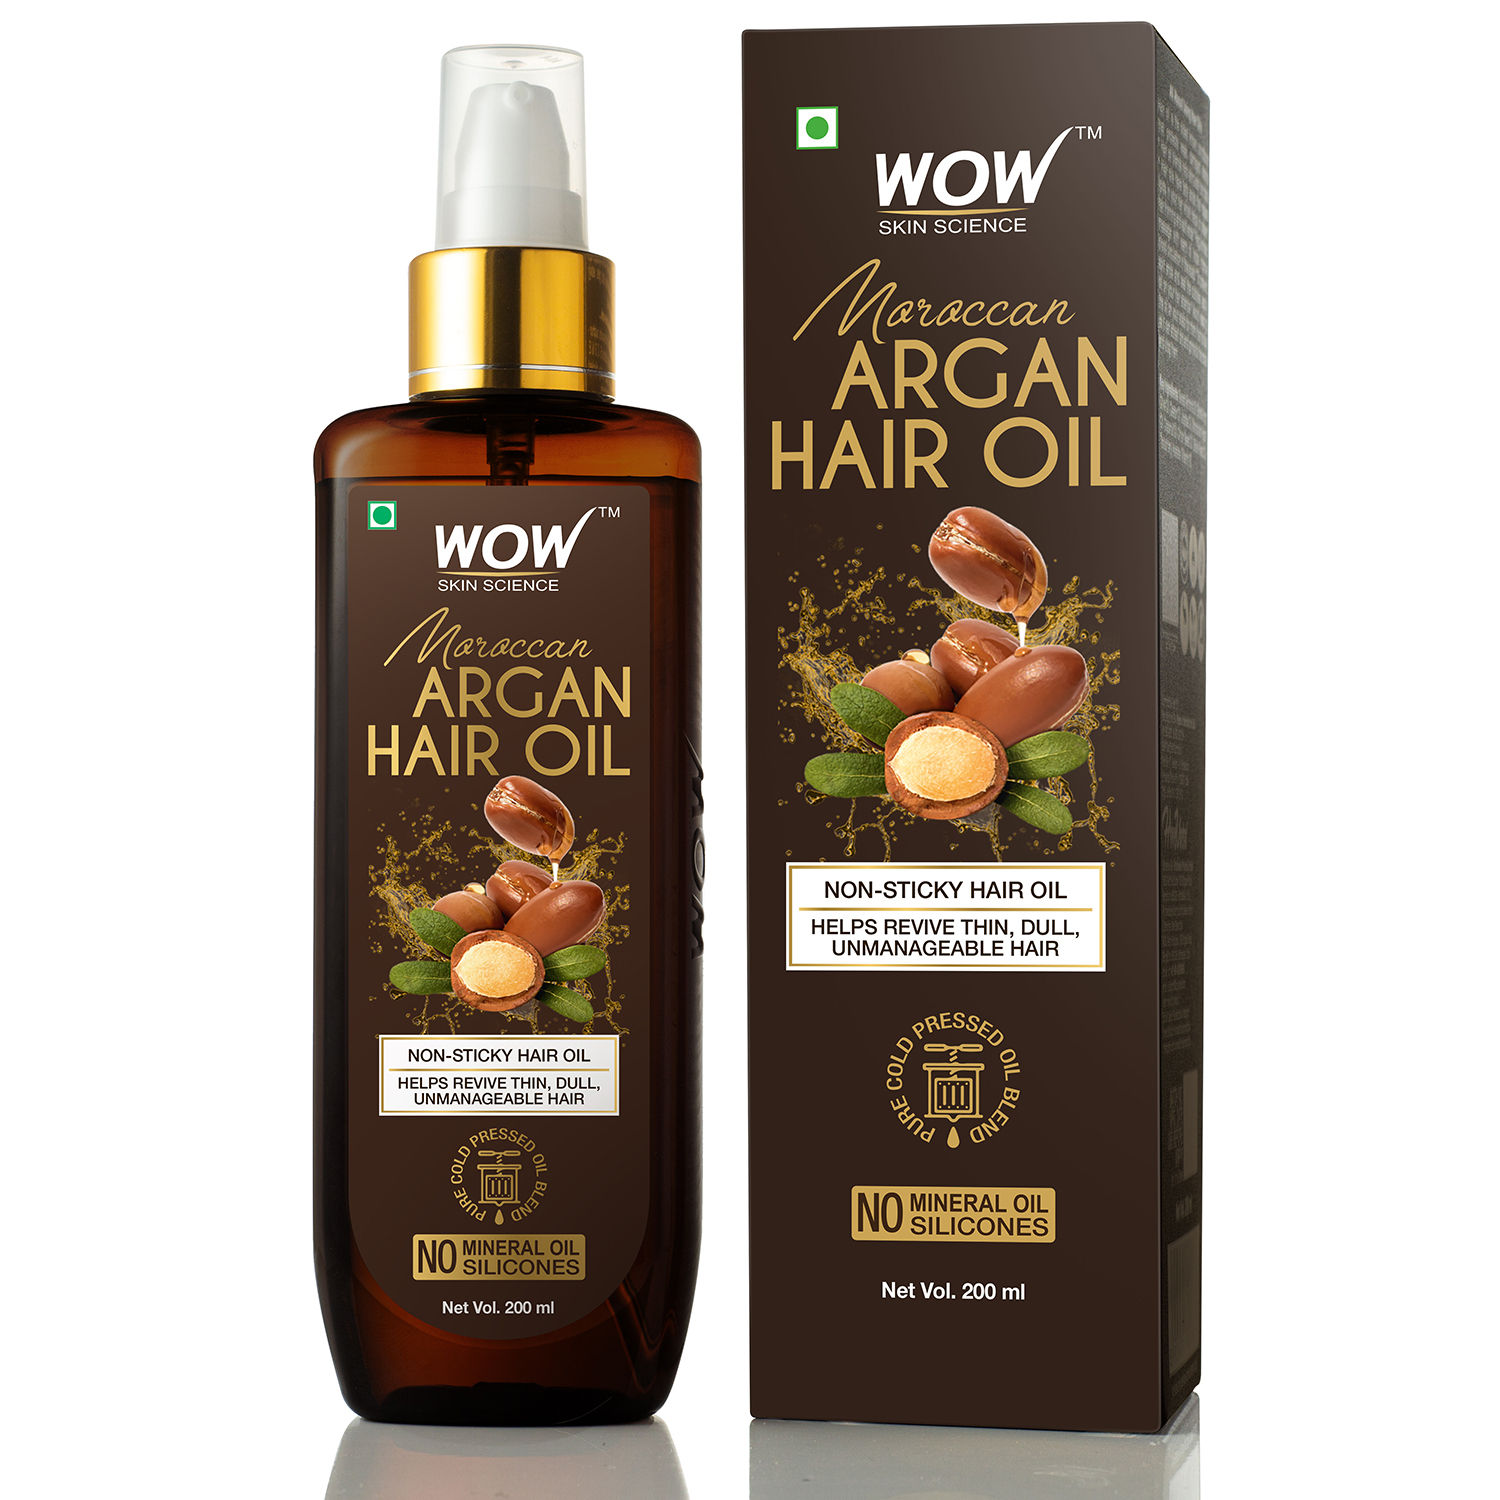 WOW Skin Science Moroccan Argan Hair Oil